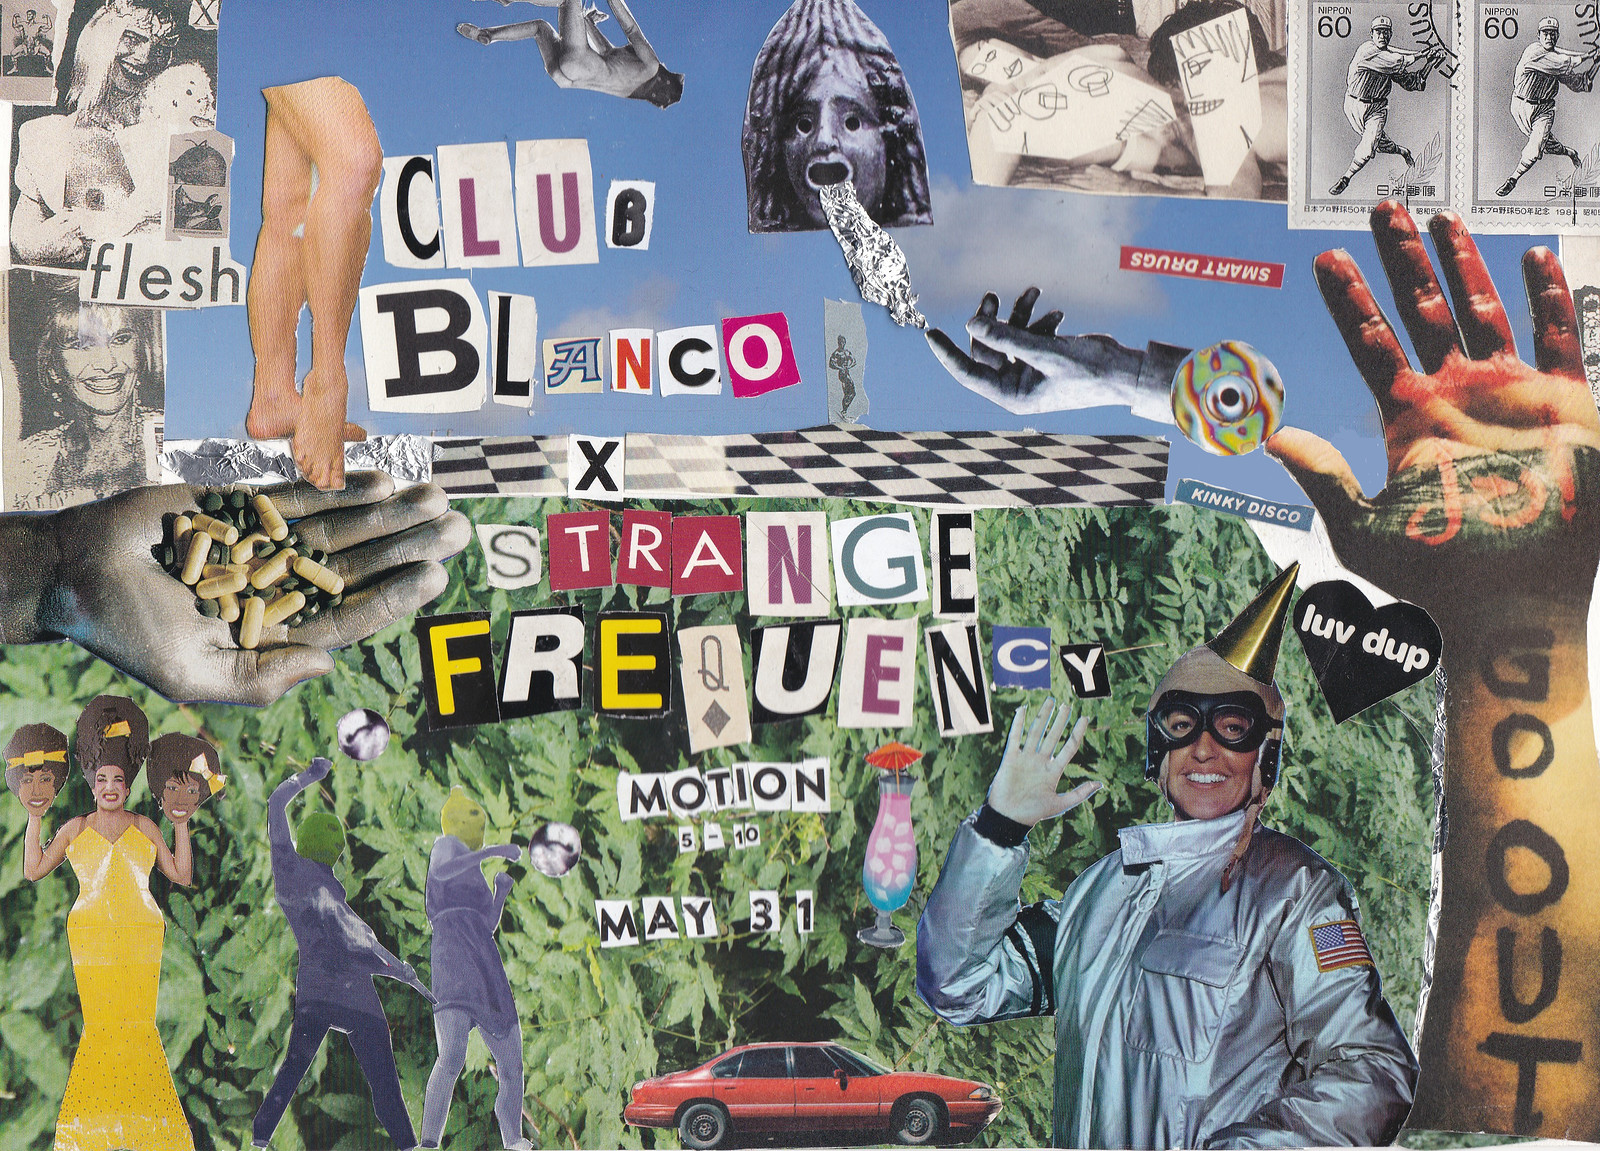 Lock Yard x Club Blanco x Strange Frequency at Motion